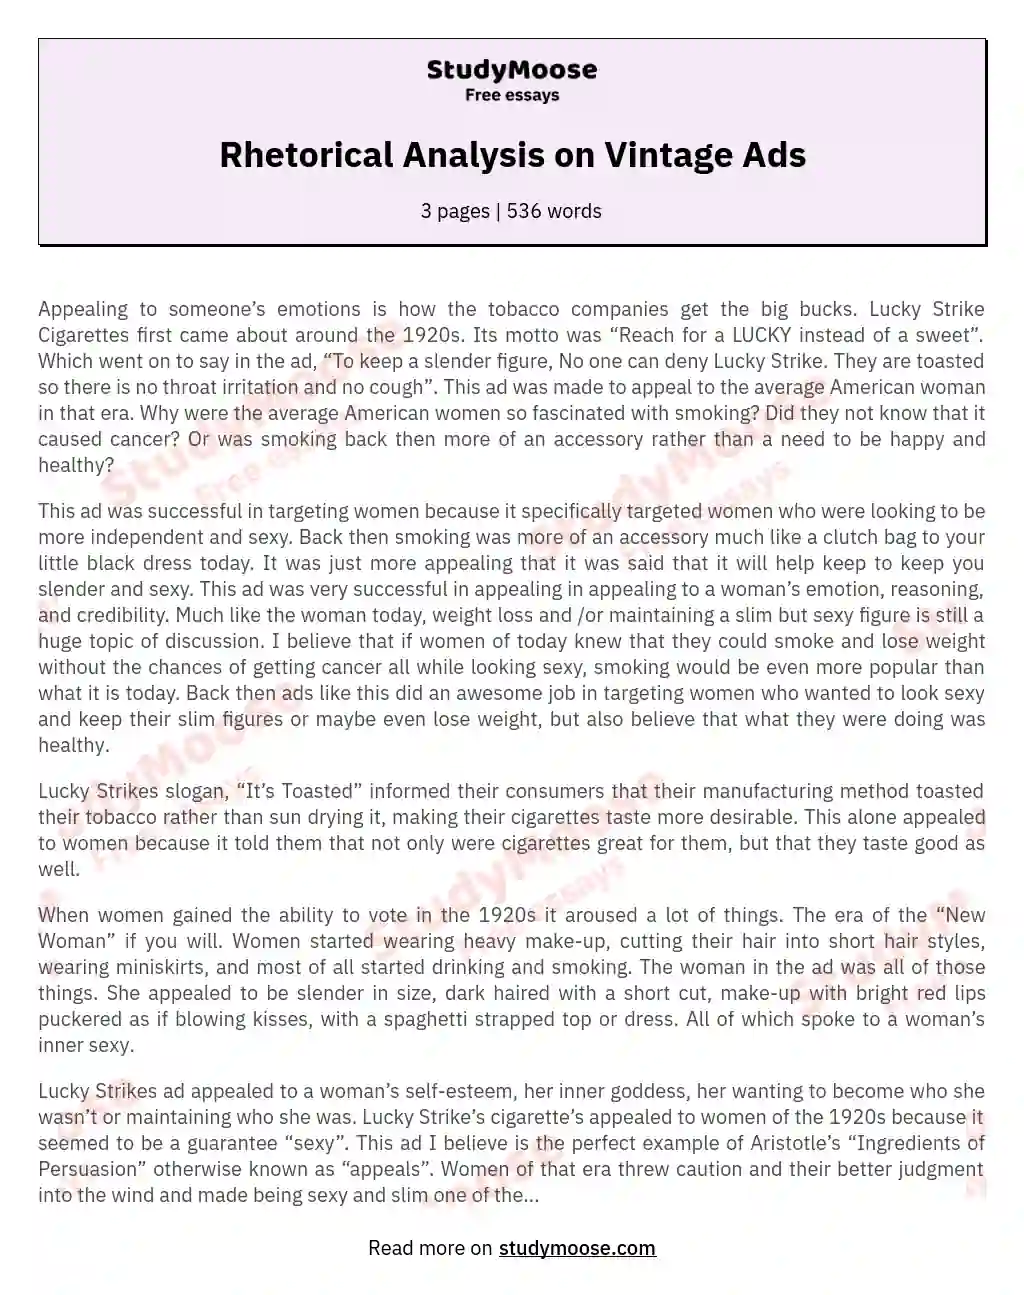 Rhetorical Analysis on Vintage Ads